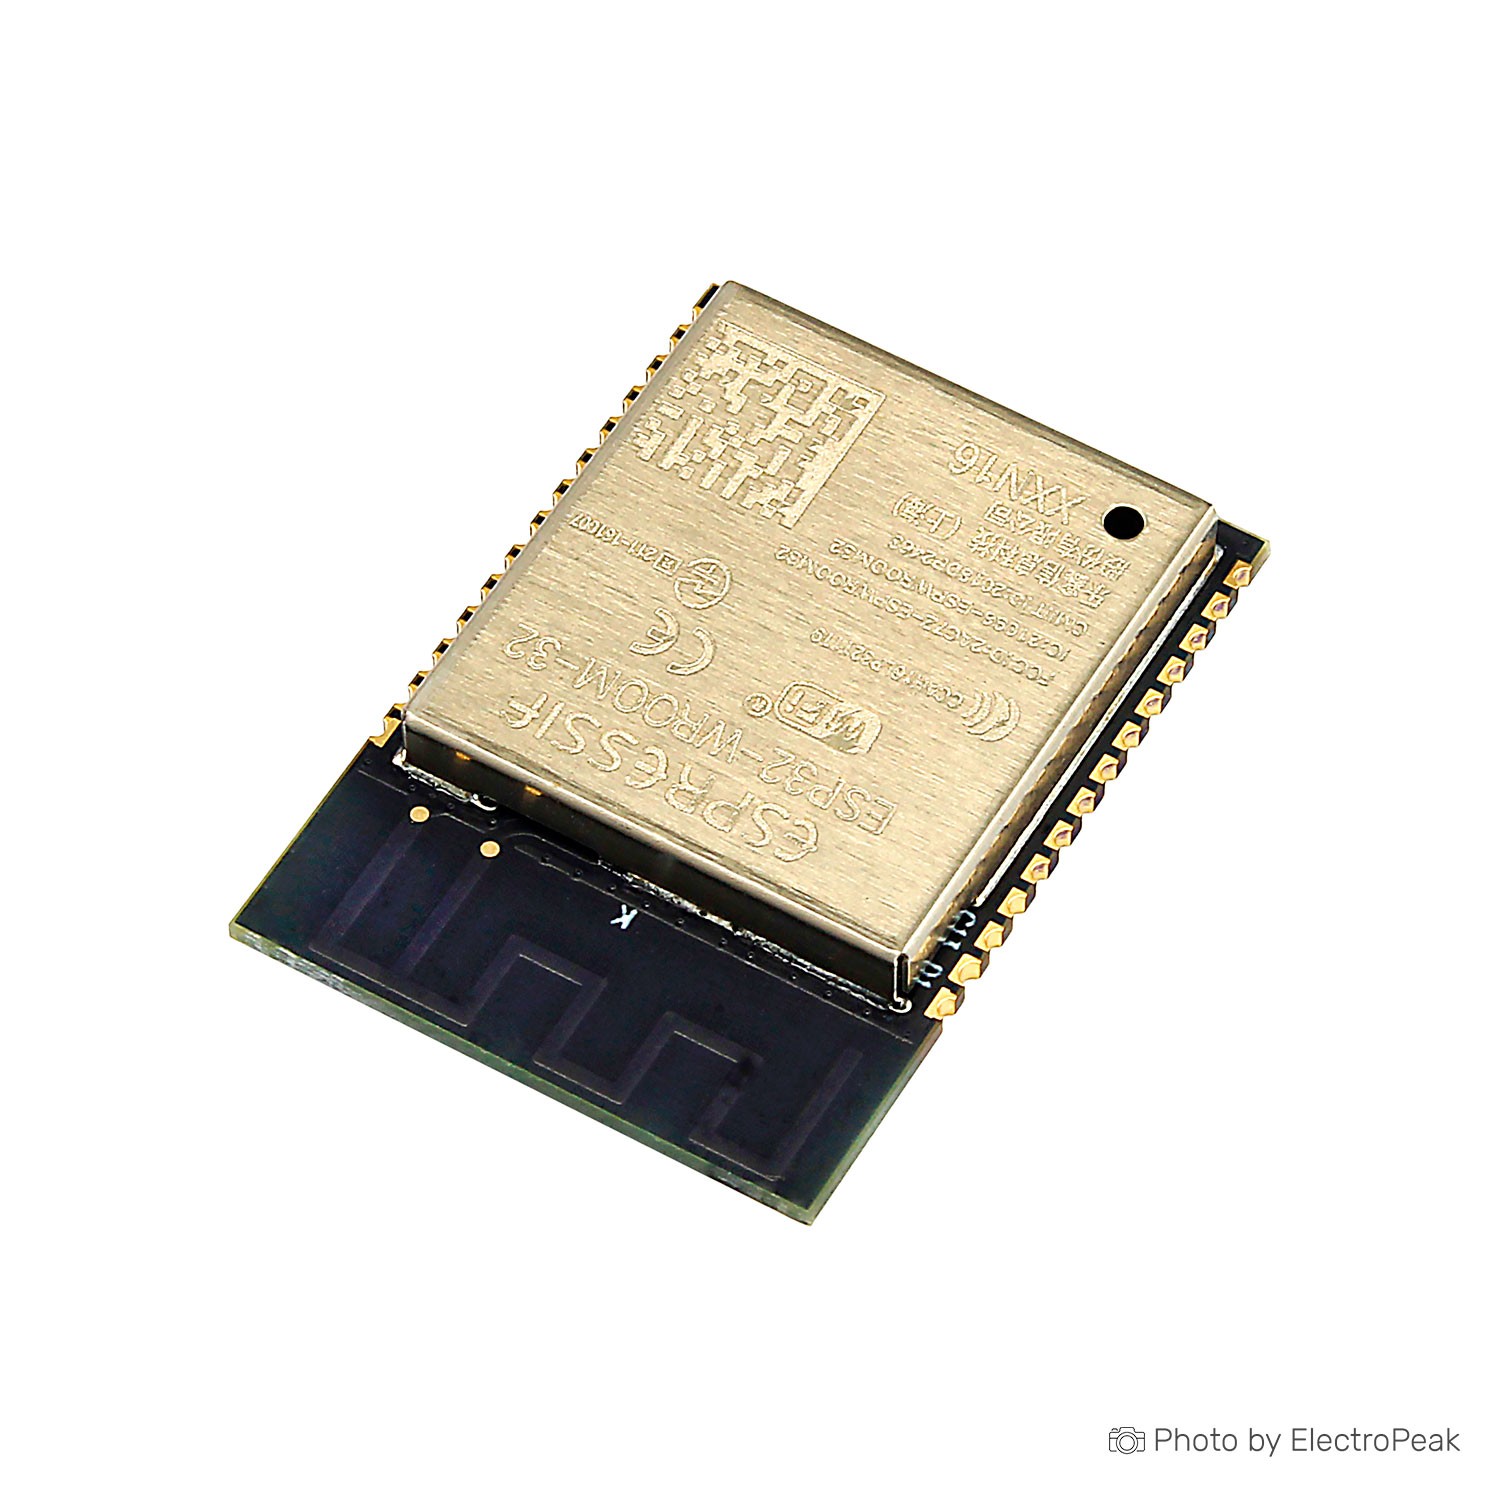 ESP32-WROOM-32D (4MB) - WiFi and Bluetooth module